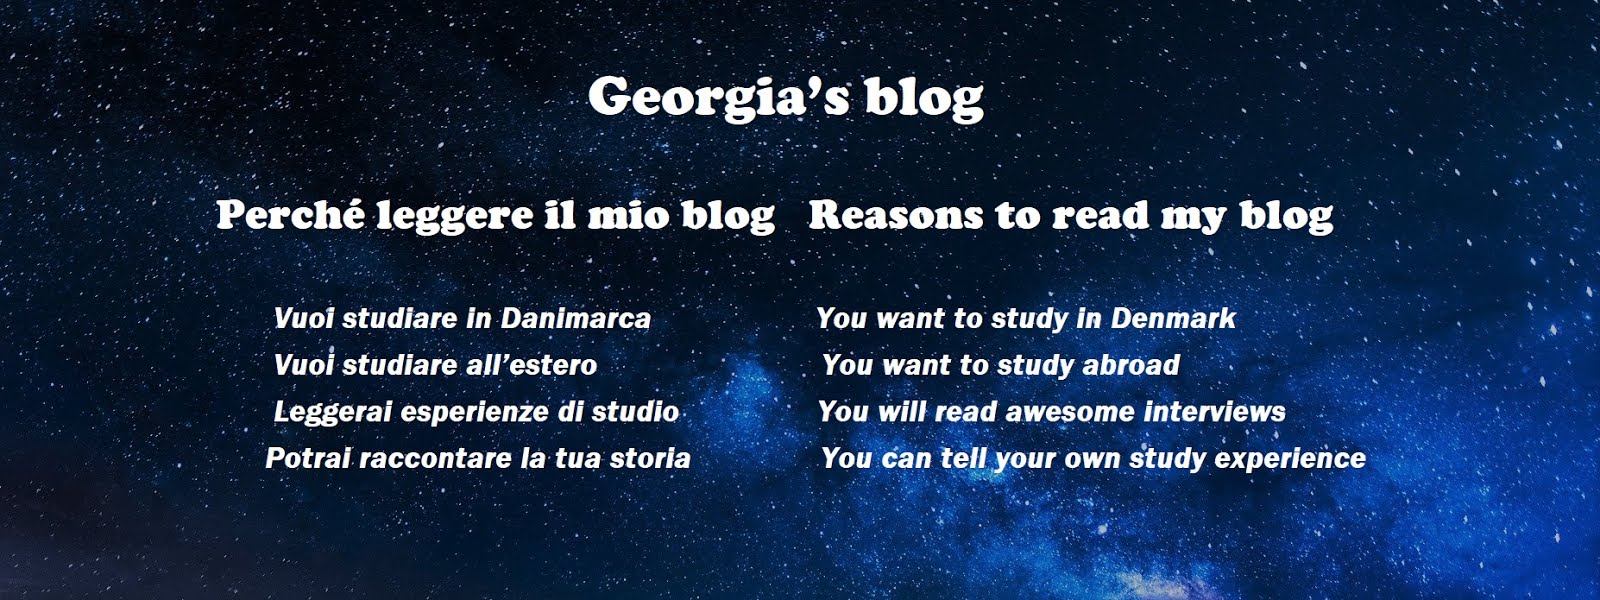 Studying abroad - Georgia's blog 